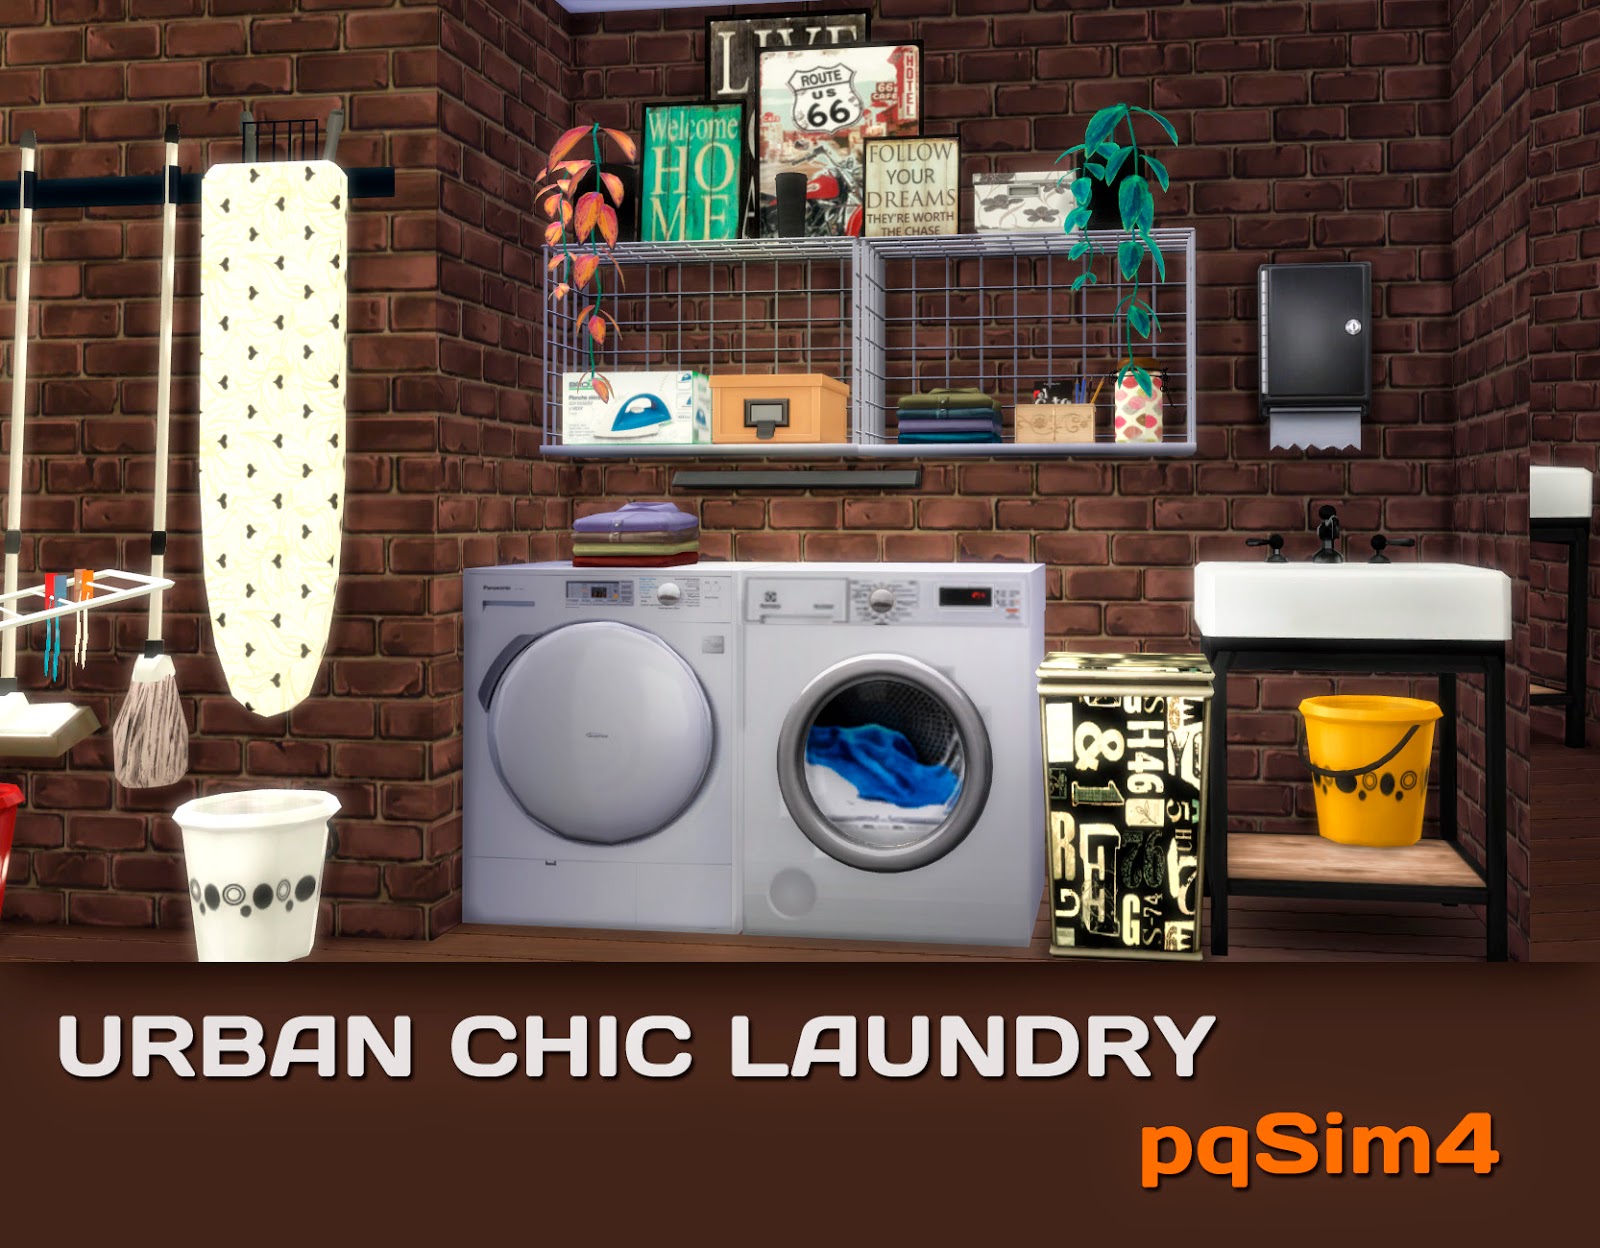 Washing Machine The Sims 4 Urban Chic Laundry. Sims 4 Custom Content.